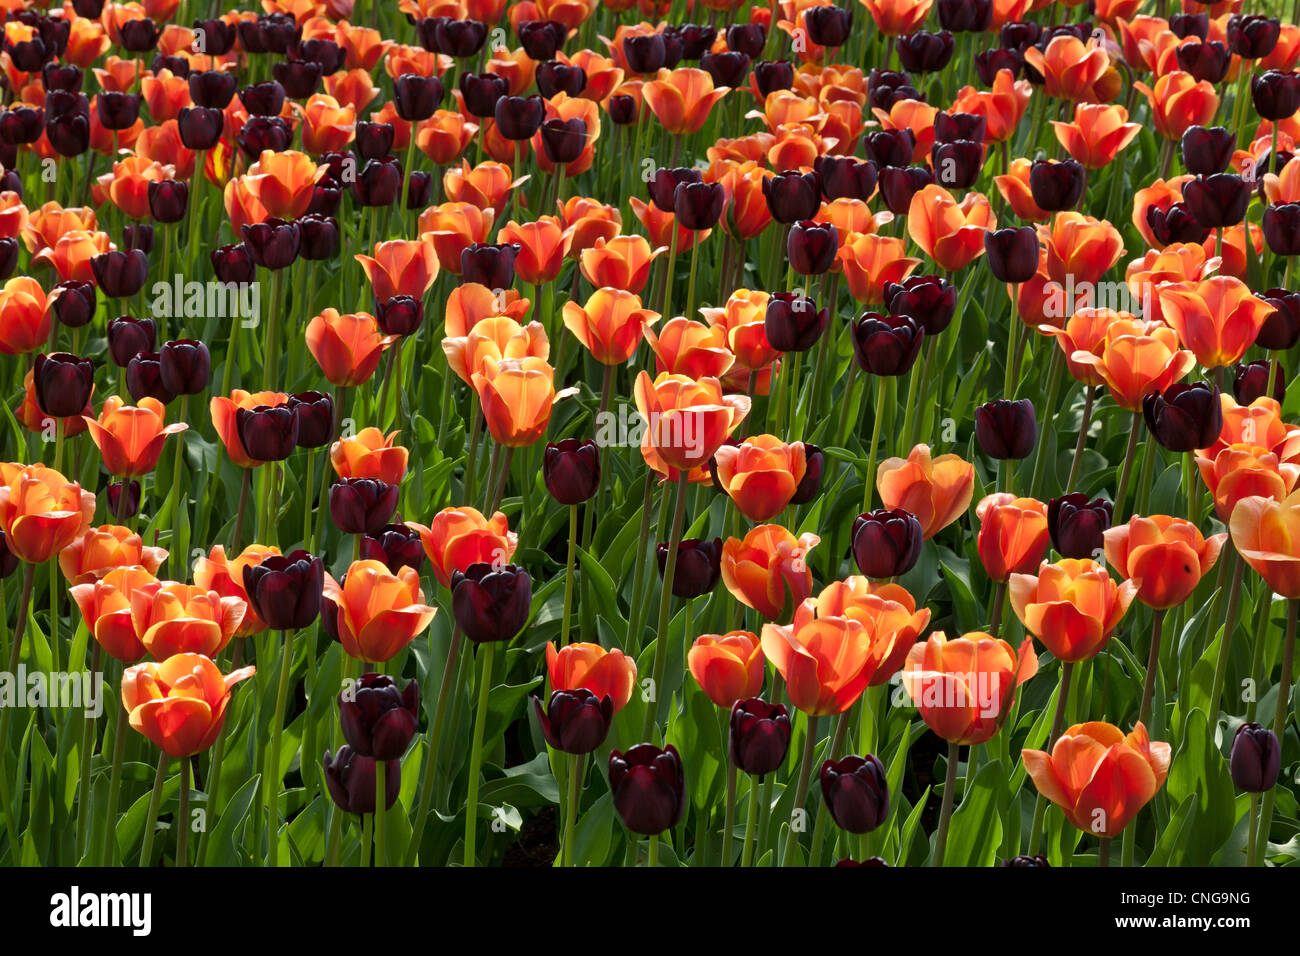 Flowerbed of tulips. Stock Photo